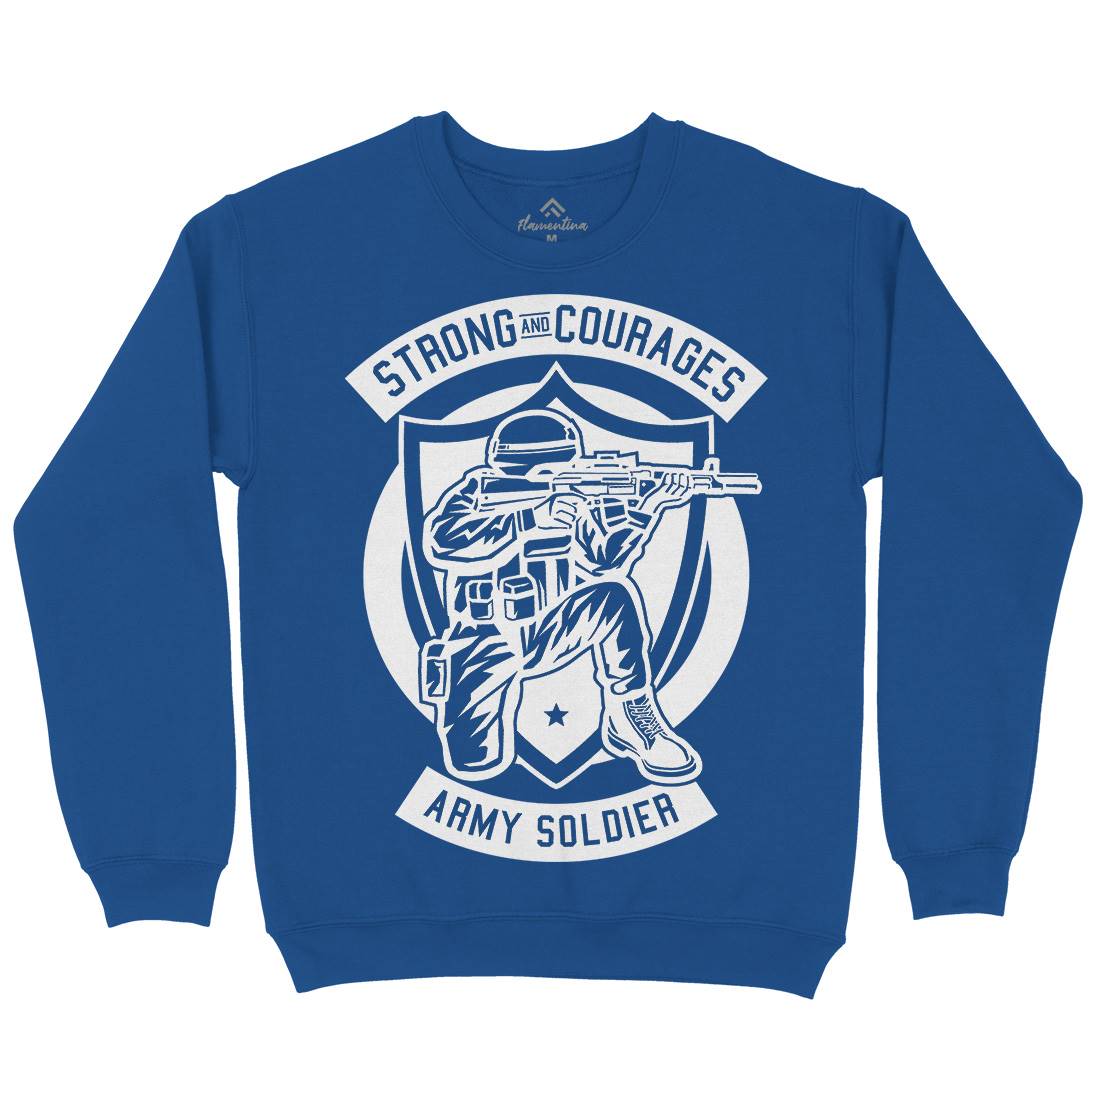 Army Soldier Kids Crew Neck Sweatshirt Army B483